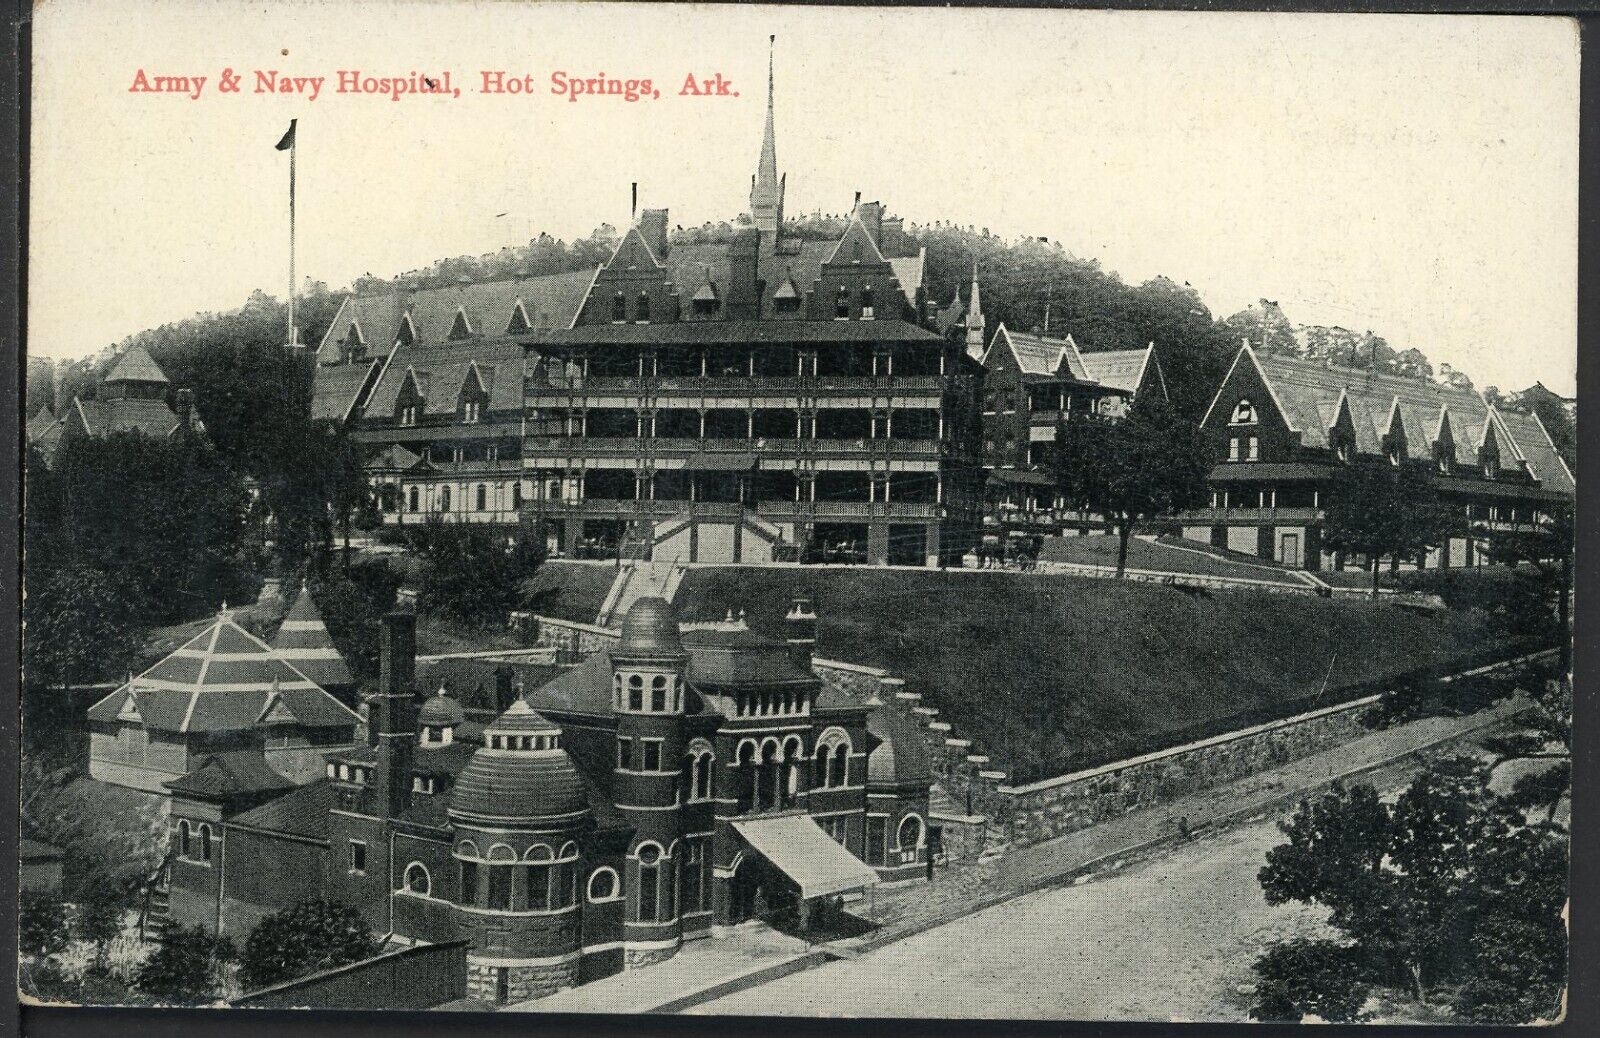 Early Army & Navy Hospital Hot Springs Arkansas Historic Vintage Postcard M1532a